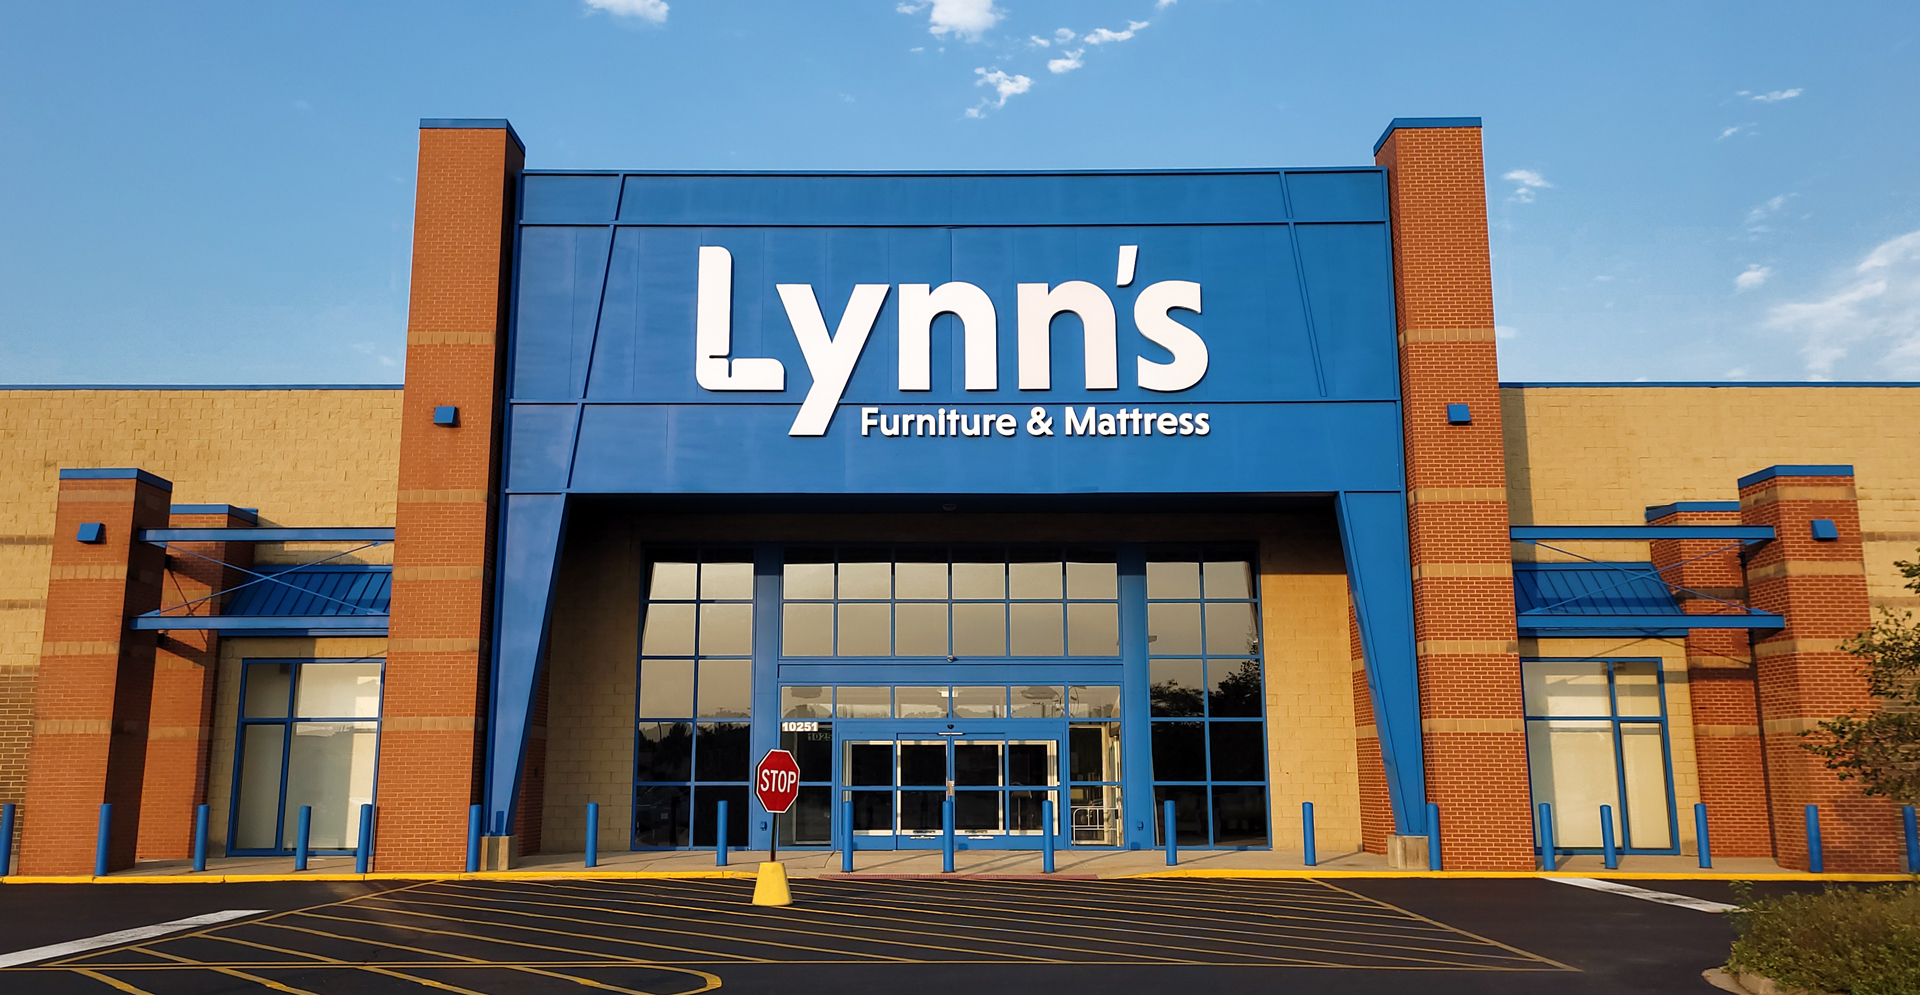 Lynn's Furniture & Mattress building entrance